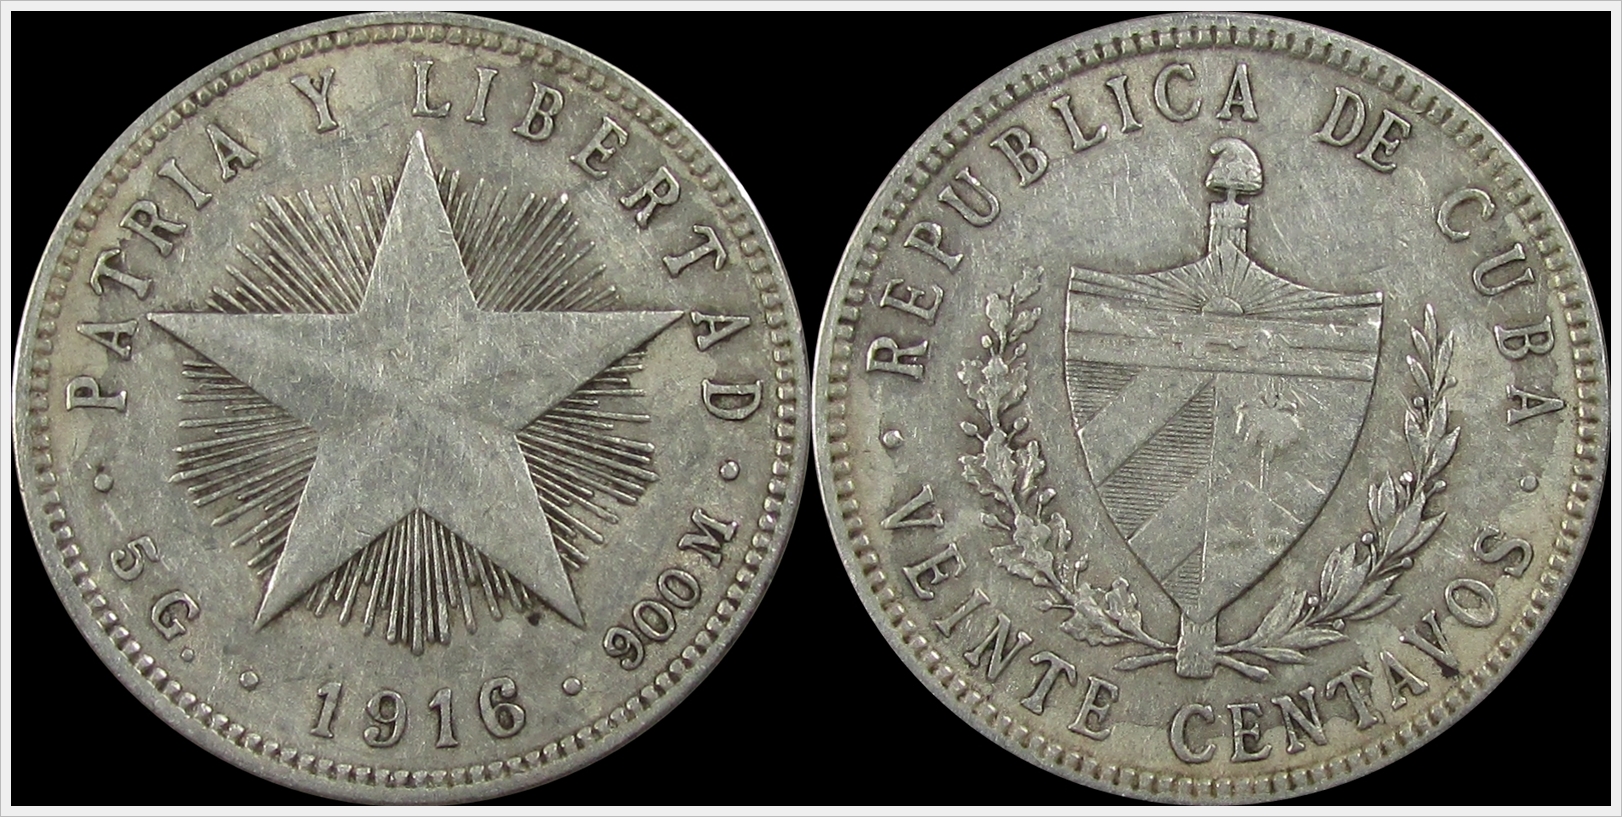 Cuba 1916 Veinte Centavos.jpg